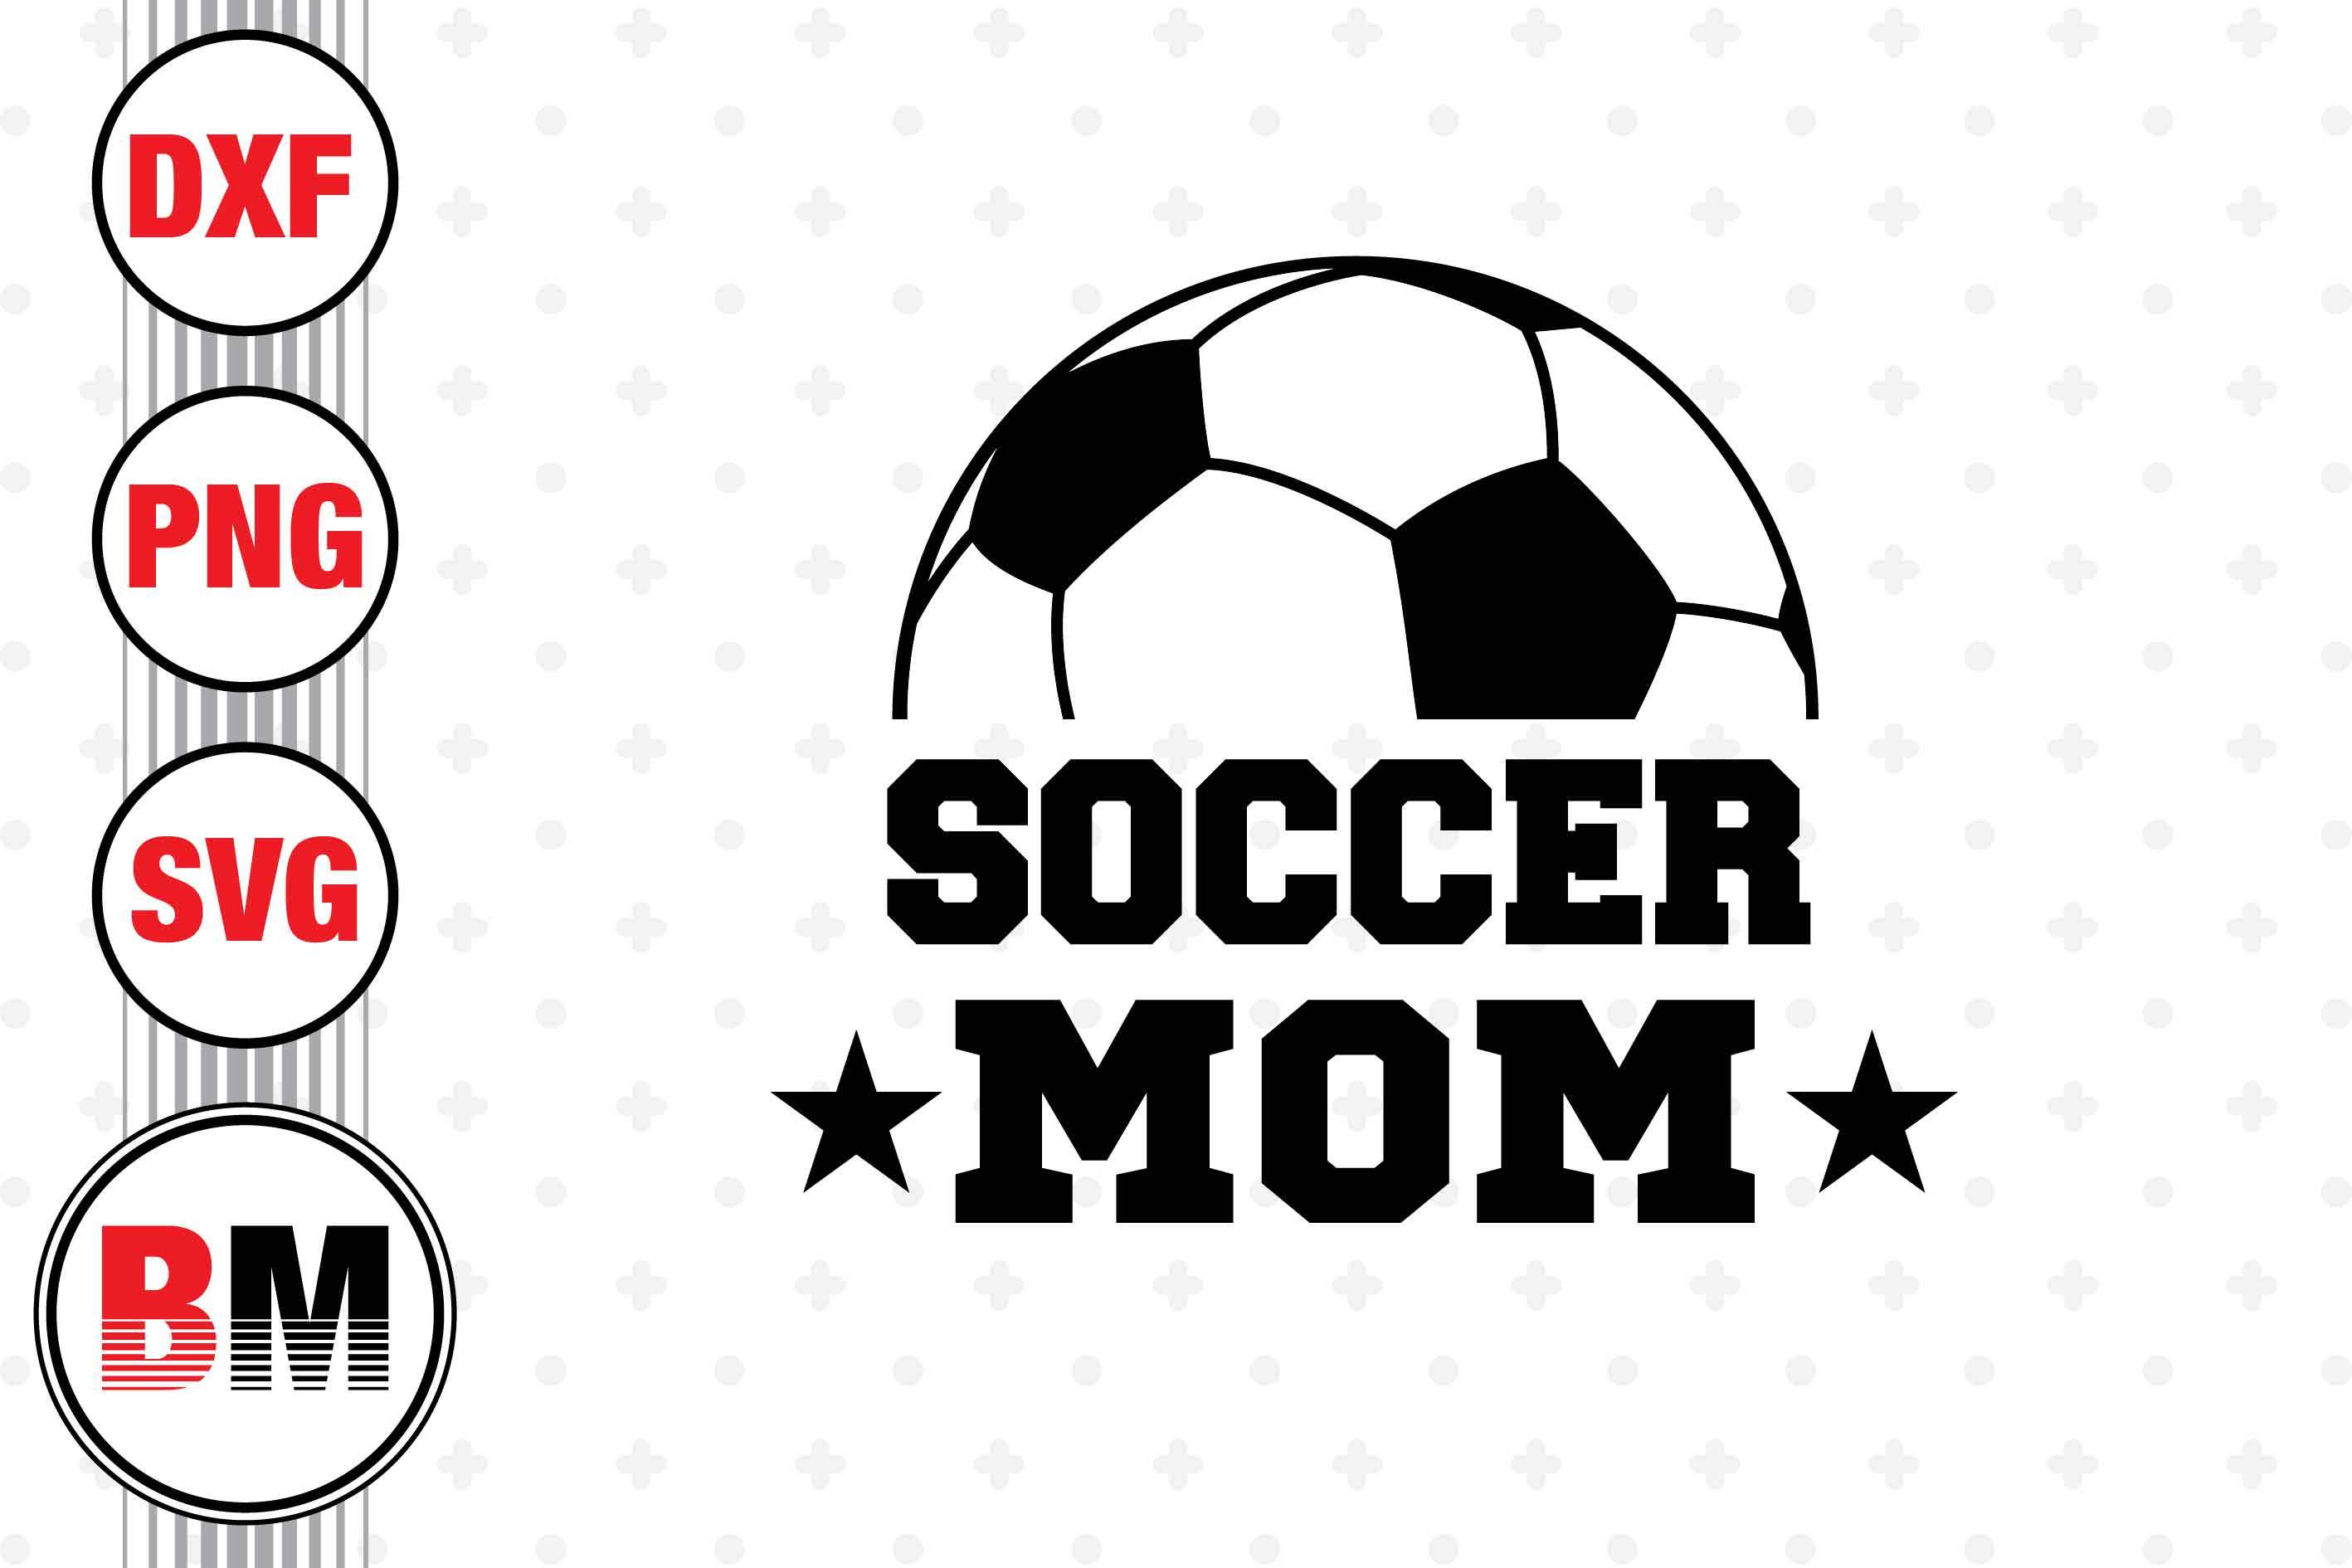 soccer mom clipart free